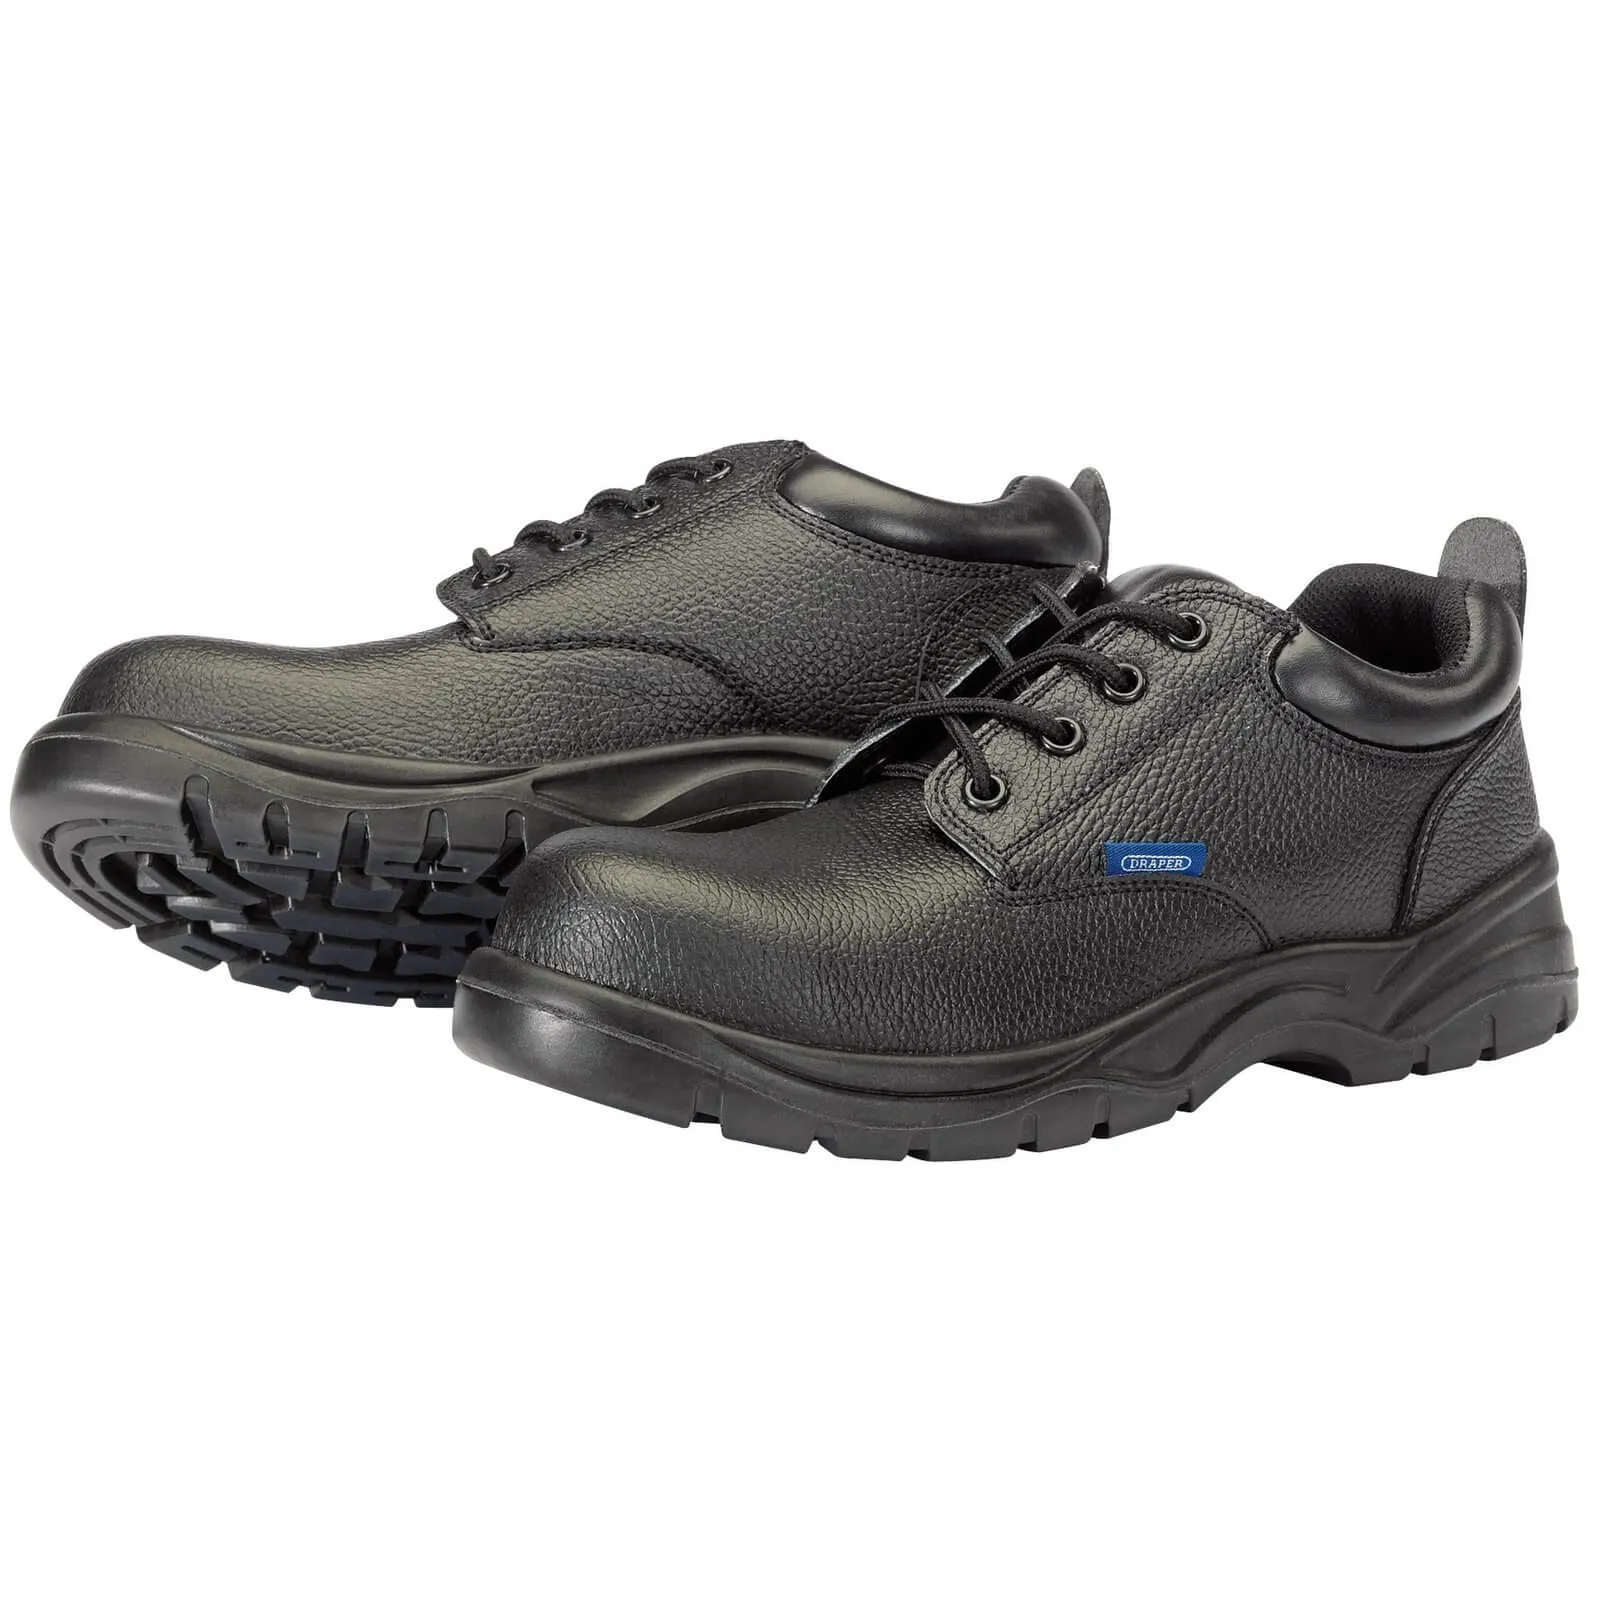 Draper Non Metallic Composite Safety Shoe - Size 12